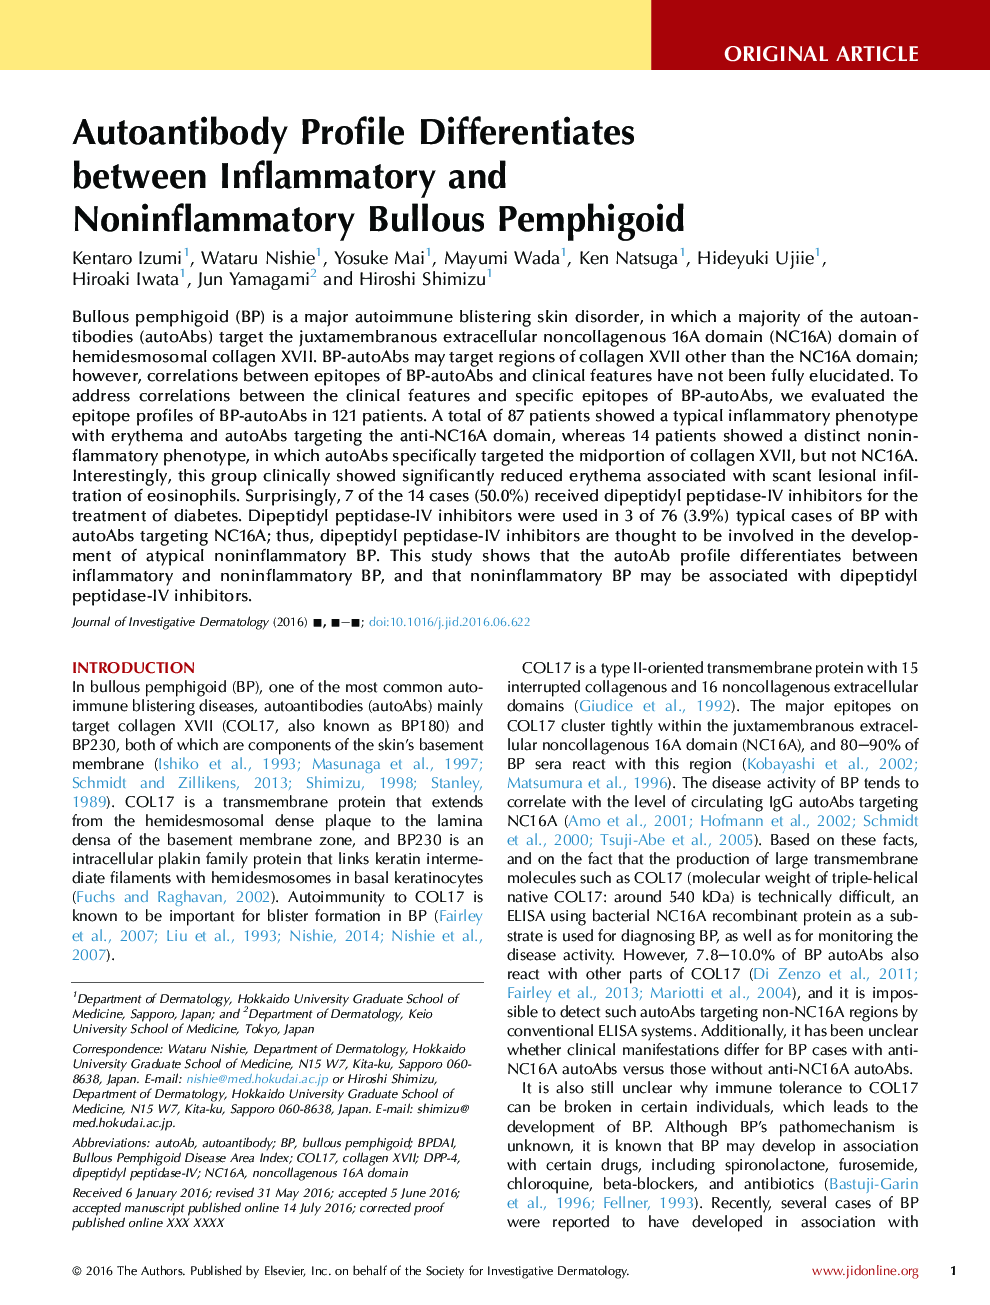 Autoantibody Profile Differentiates between Inflammatory and Noninflammatory Bullous Pemphigoid